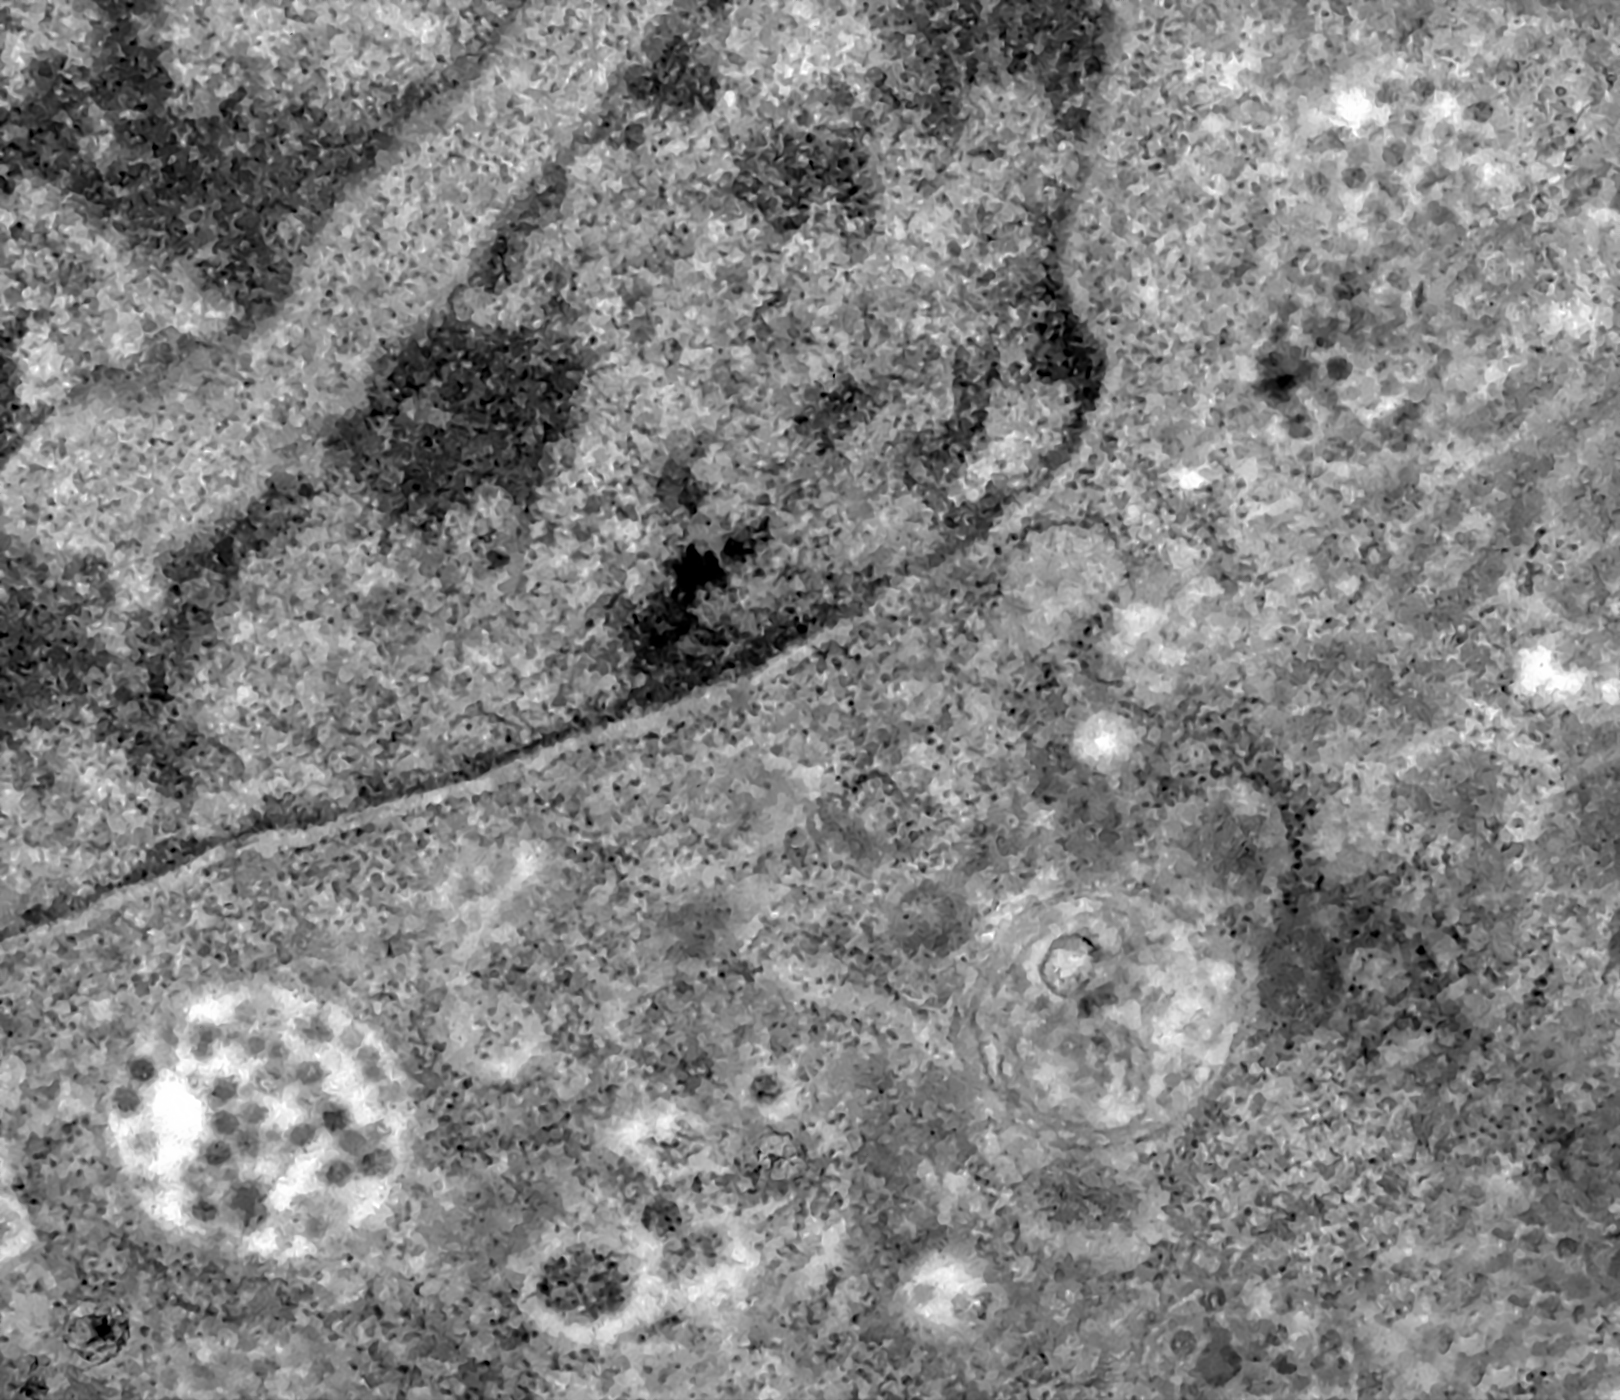 Ковид это вирус. Вирус SARS-cov-2 под микроскопом. Вирус ковид 19 электронная микроскопия. Вирус Covid 19 под микроскопом. Covid-19 под микроскопом.